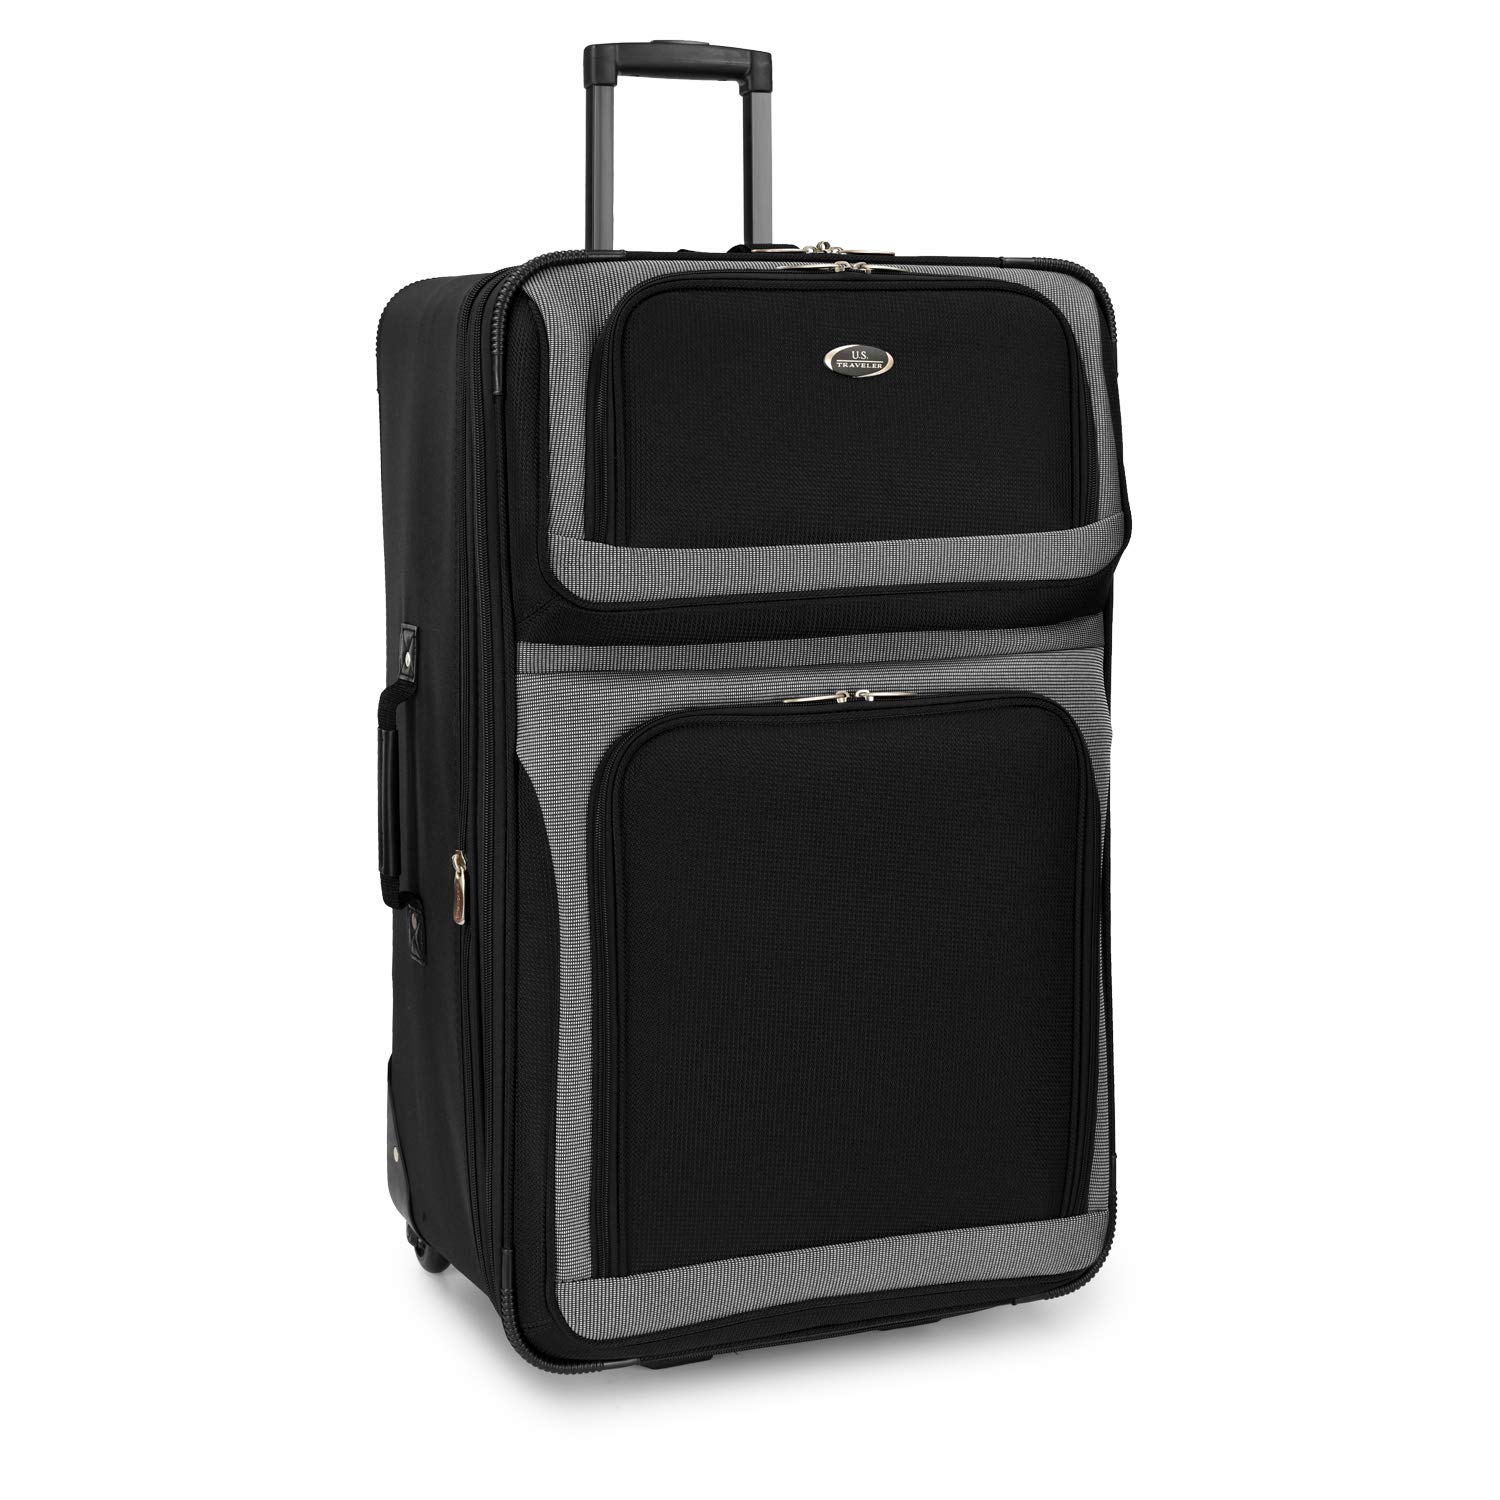 U.S. Traveler New Yorker Lightweight Softside Expandable Travel Rolling Luggage, Black/Grey, 4-Piece Set (15/21/25/29)